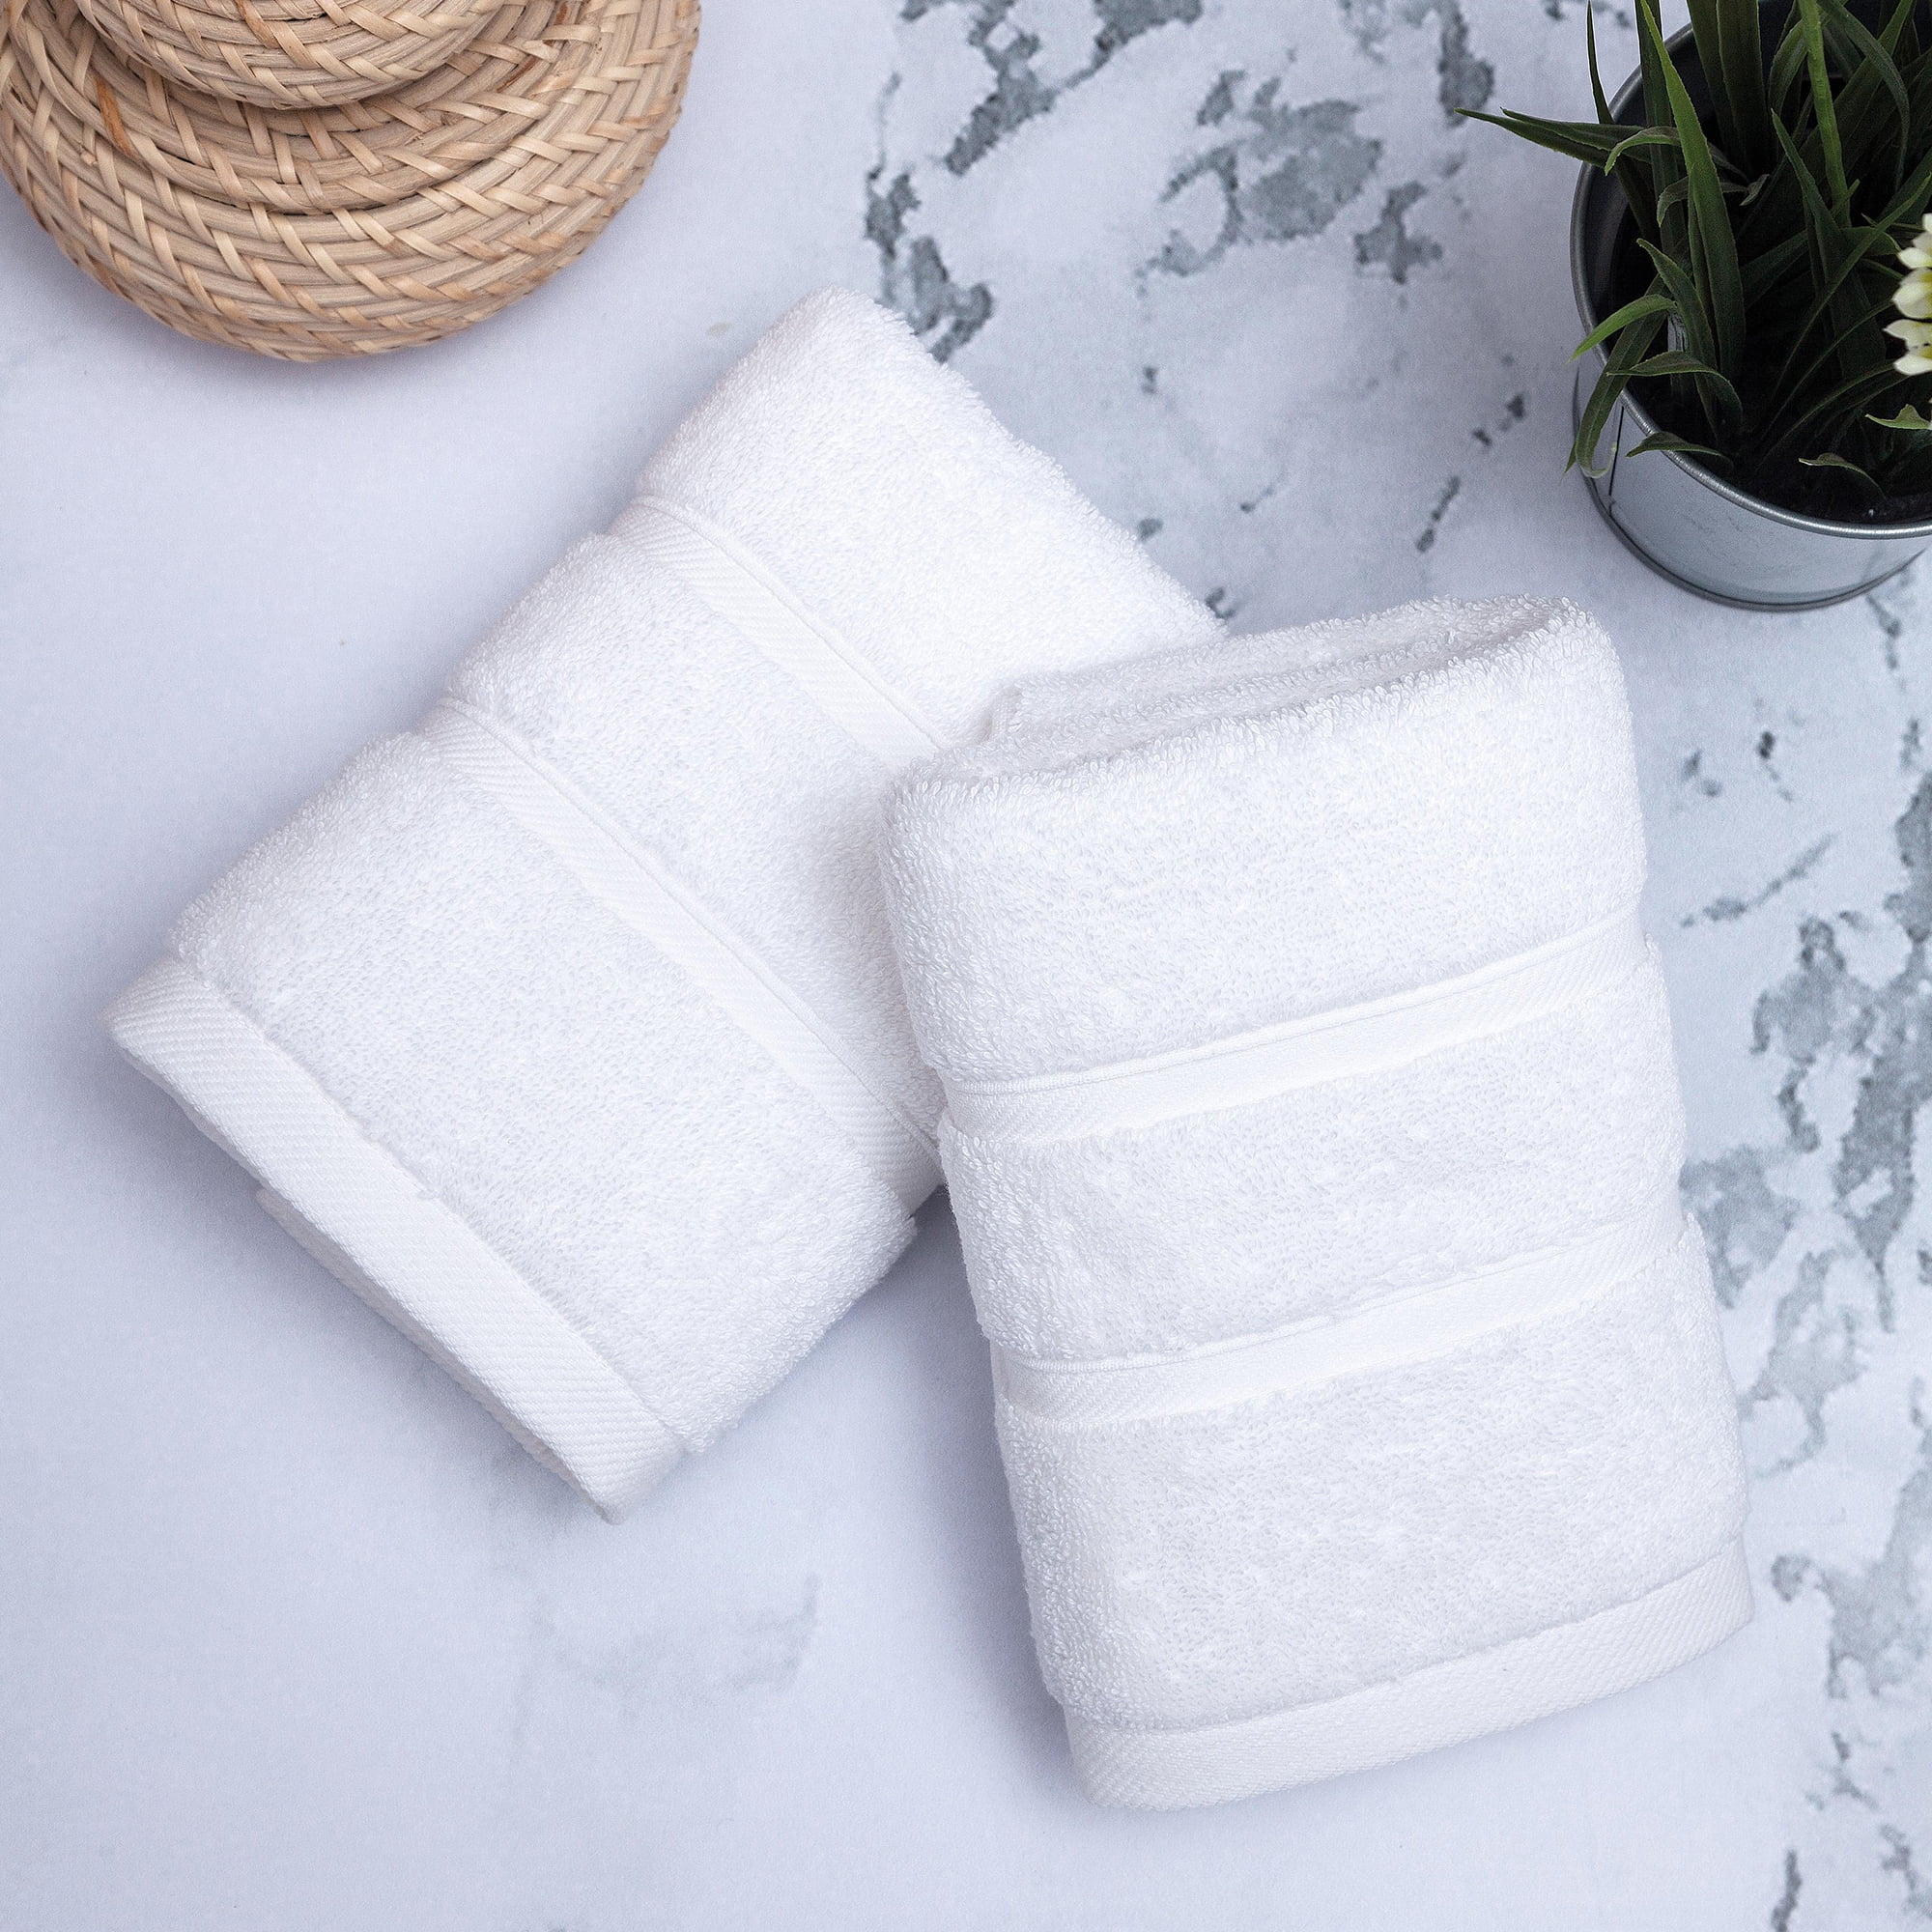 Towel Bazaar Premium Turkish Cotton Super Soft and Absorbent Towels  (2-Piece Bath Sheet Towel, Gray)